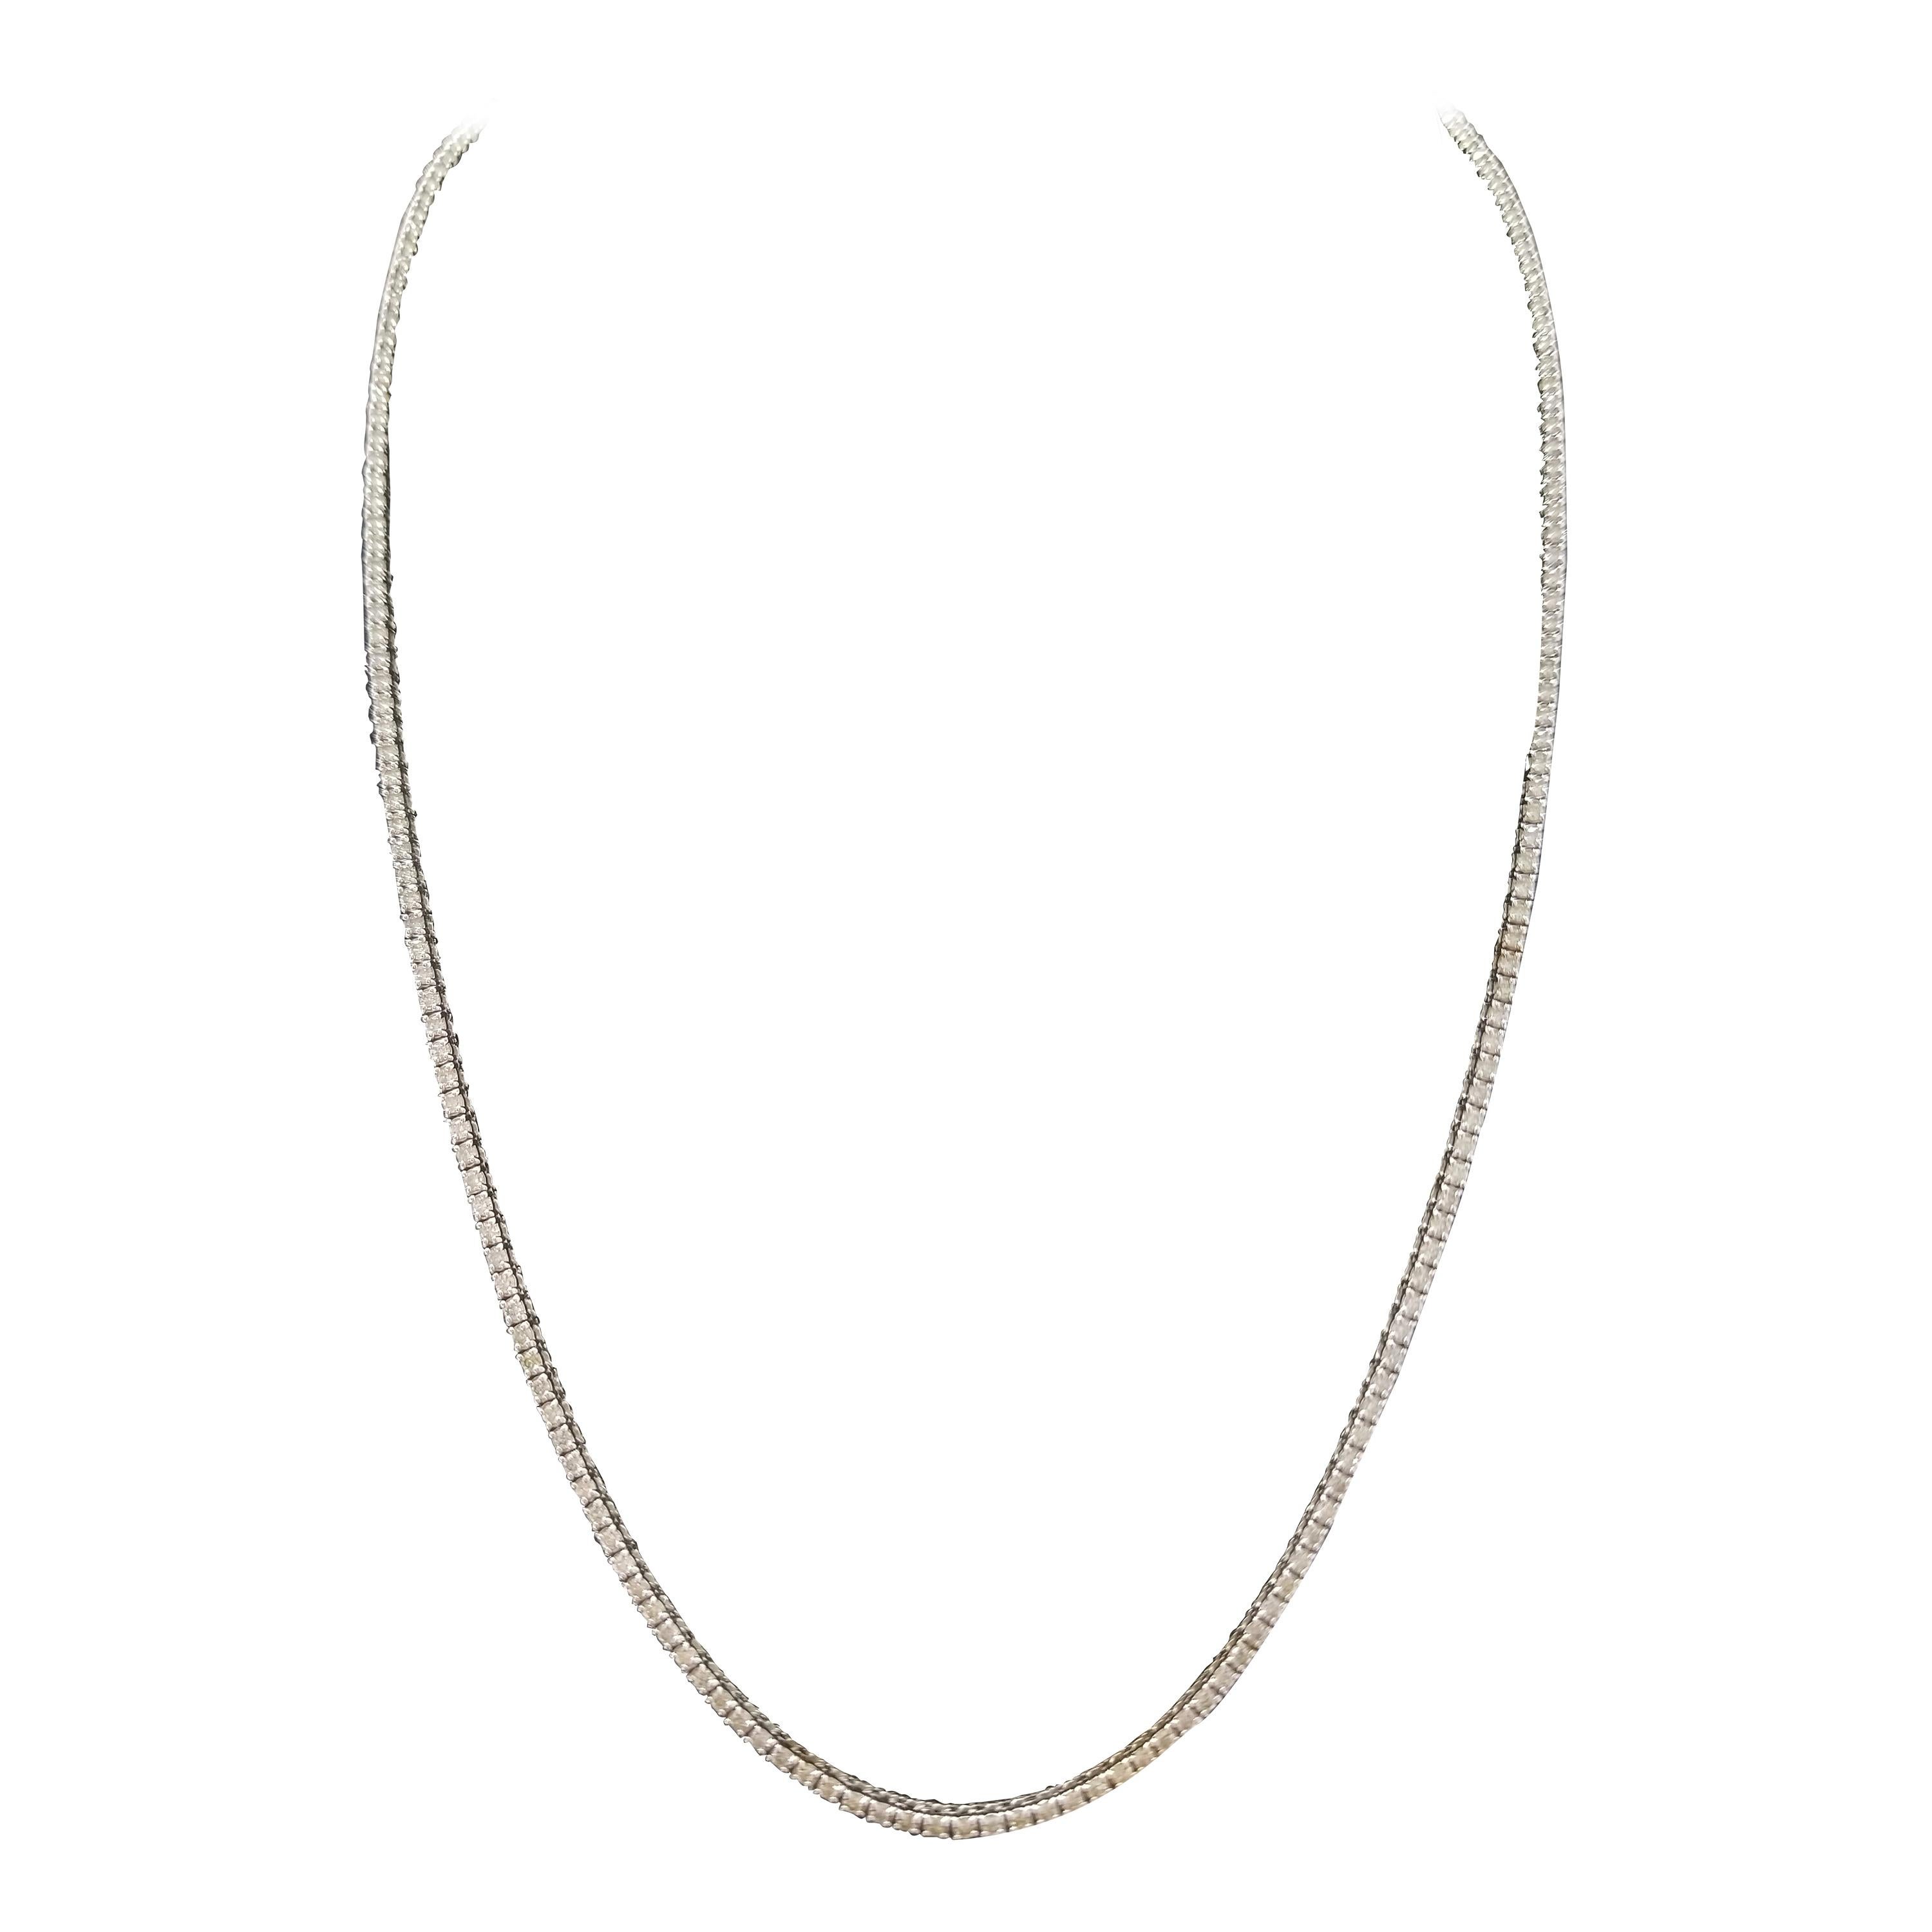 4.10 Carat Round Diamond White Gold Tennis Necklace